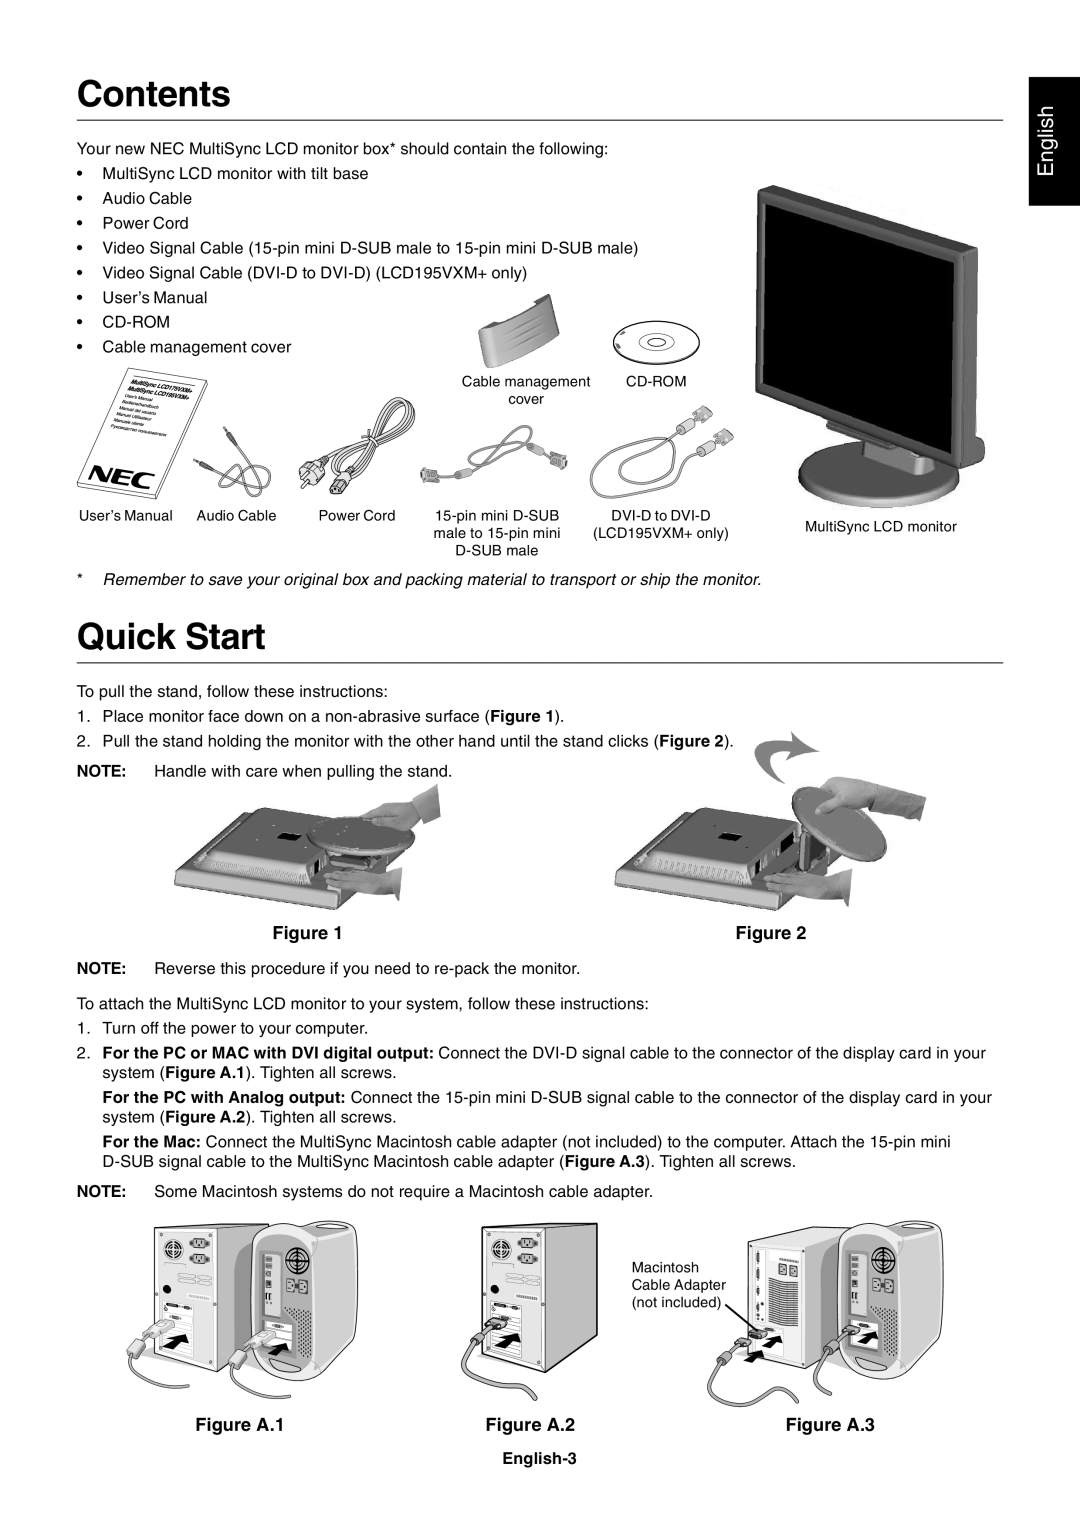 NEC LCD175VXM+ user manual Contents, Quick Start, English, Figure A.1, Figure A.2, Figure A.3 